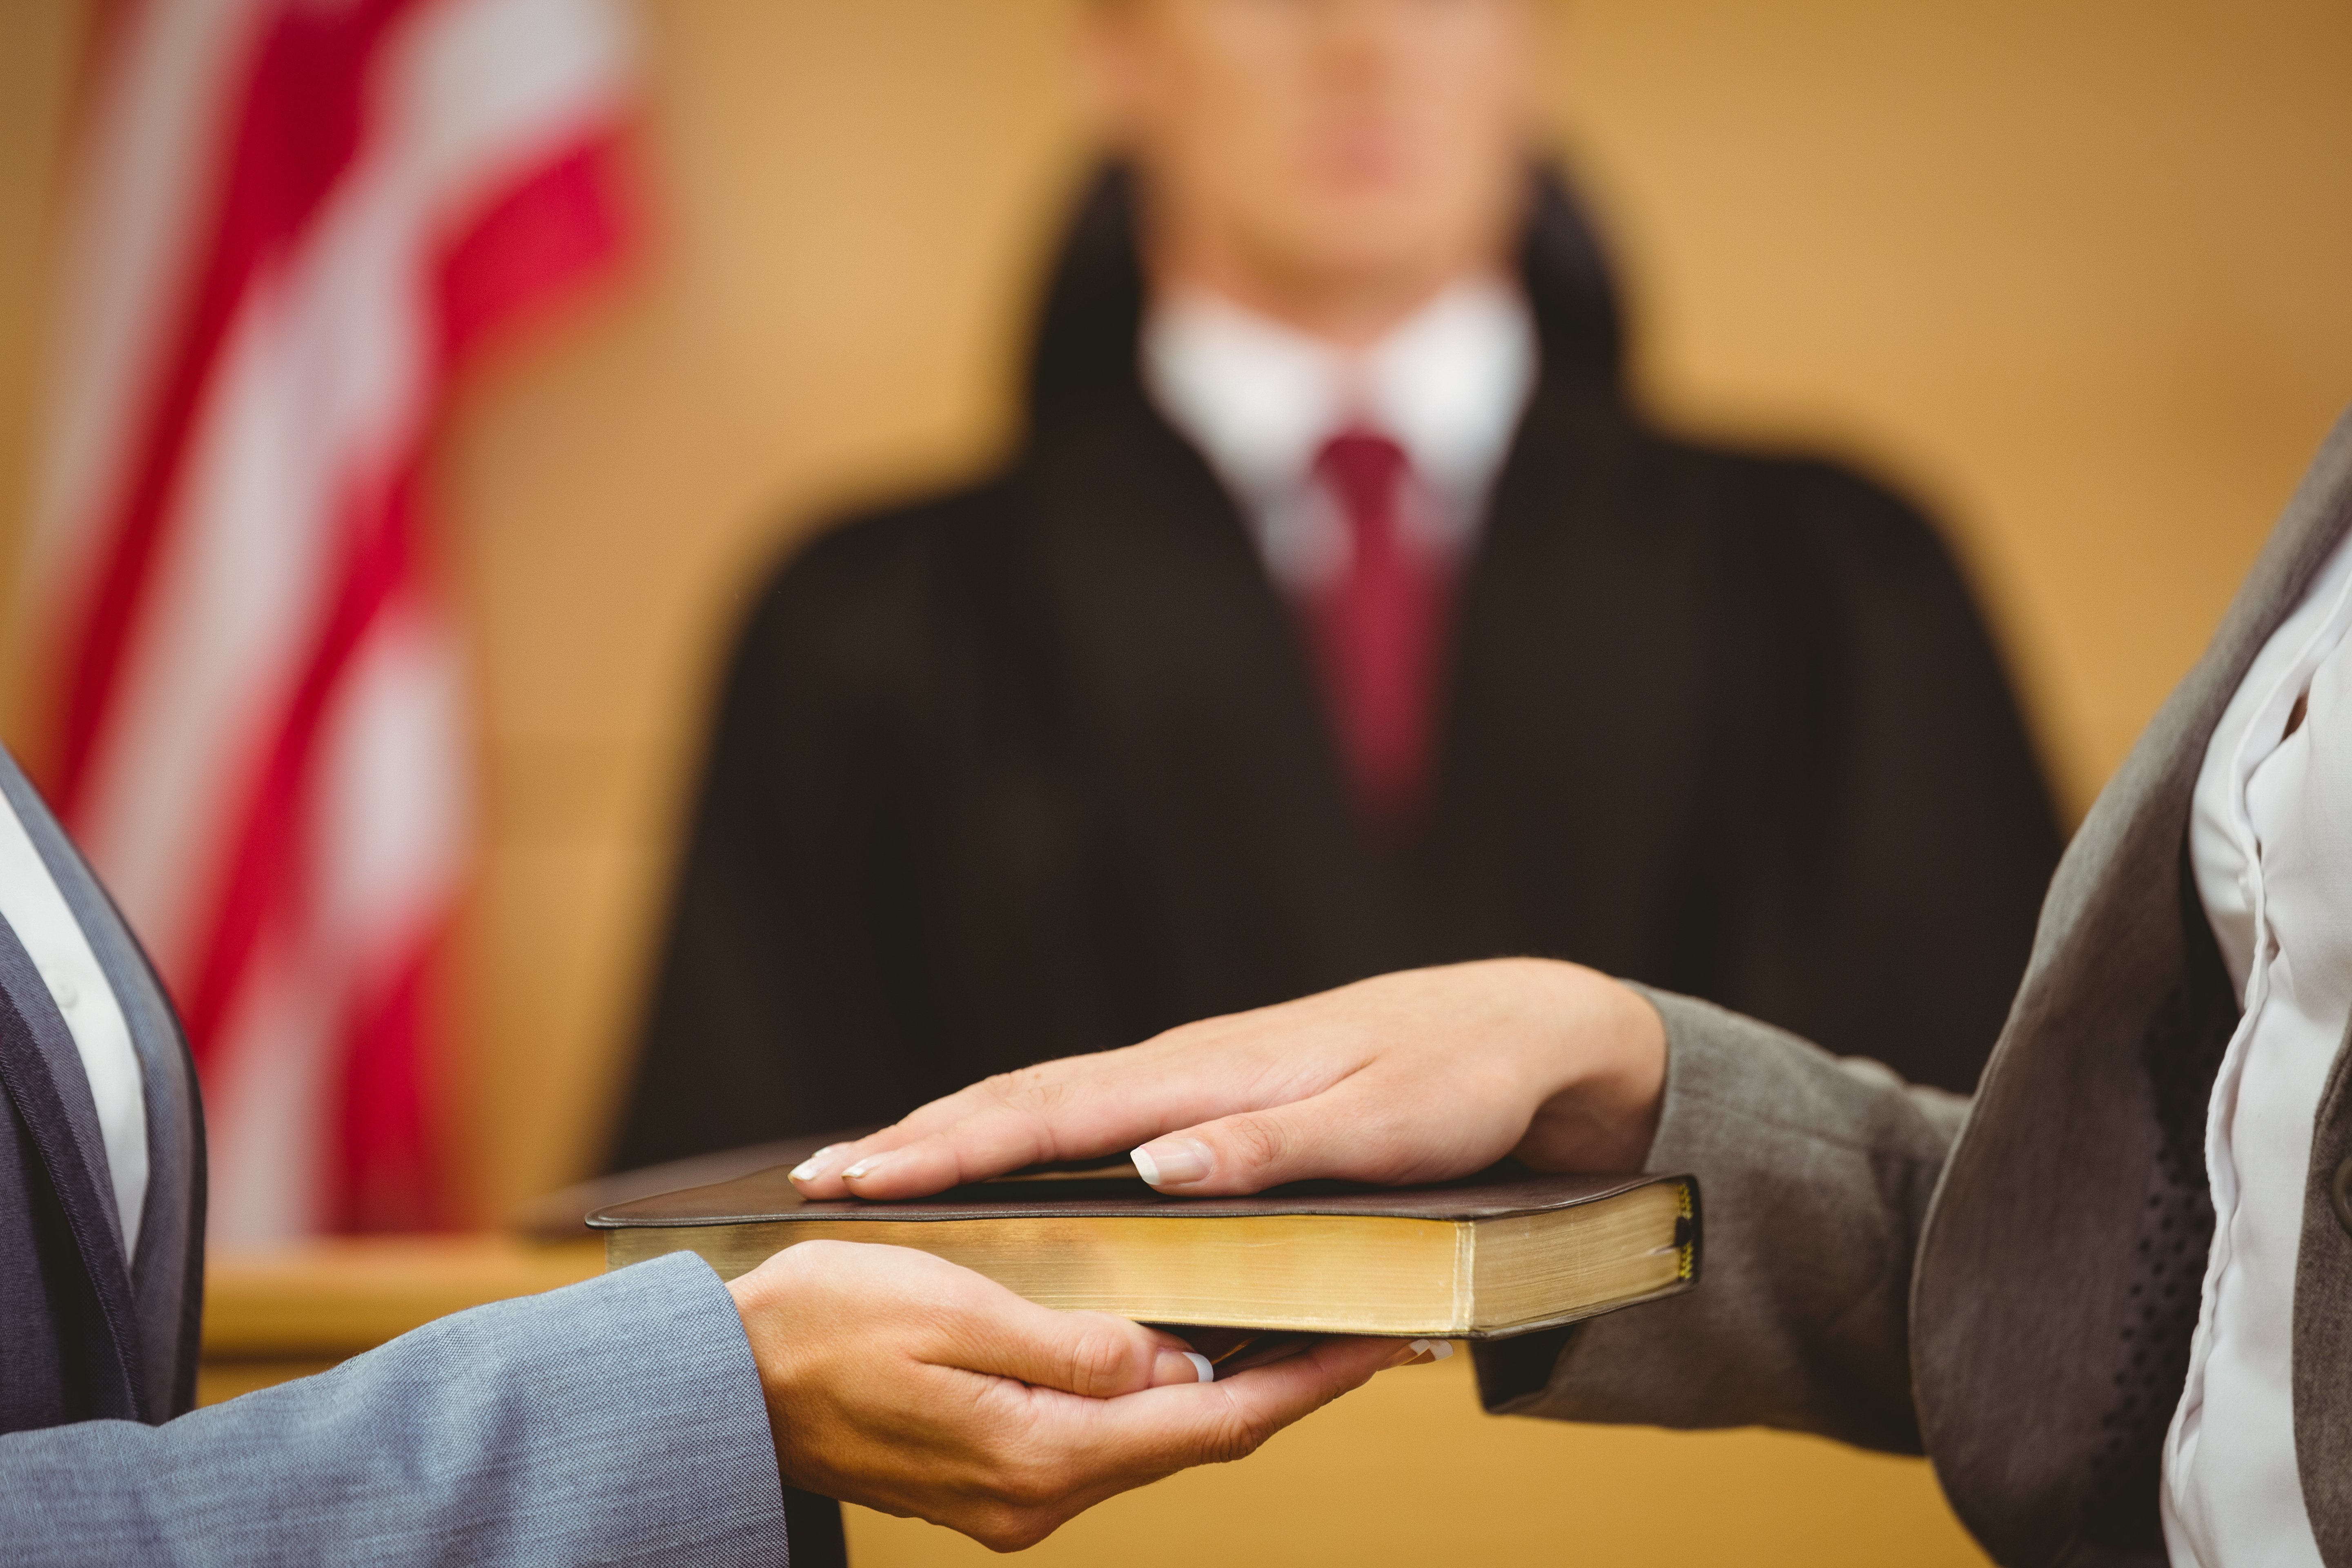 Witness swearing on bible in court. Image Shutterstock